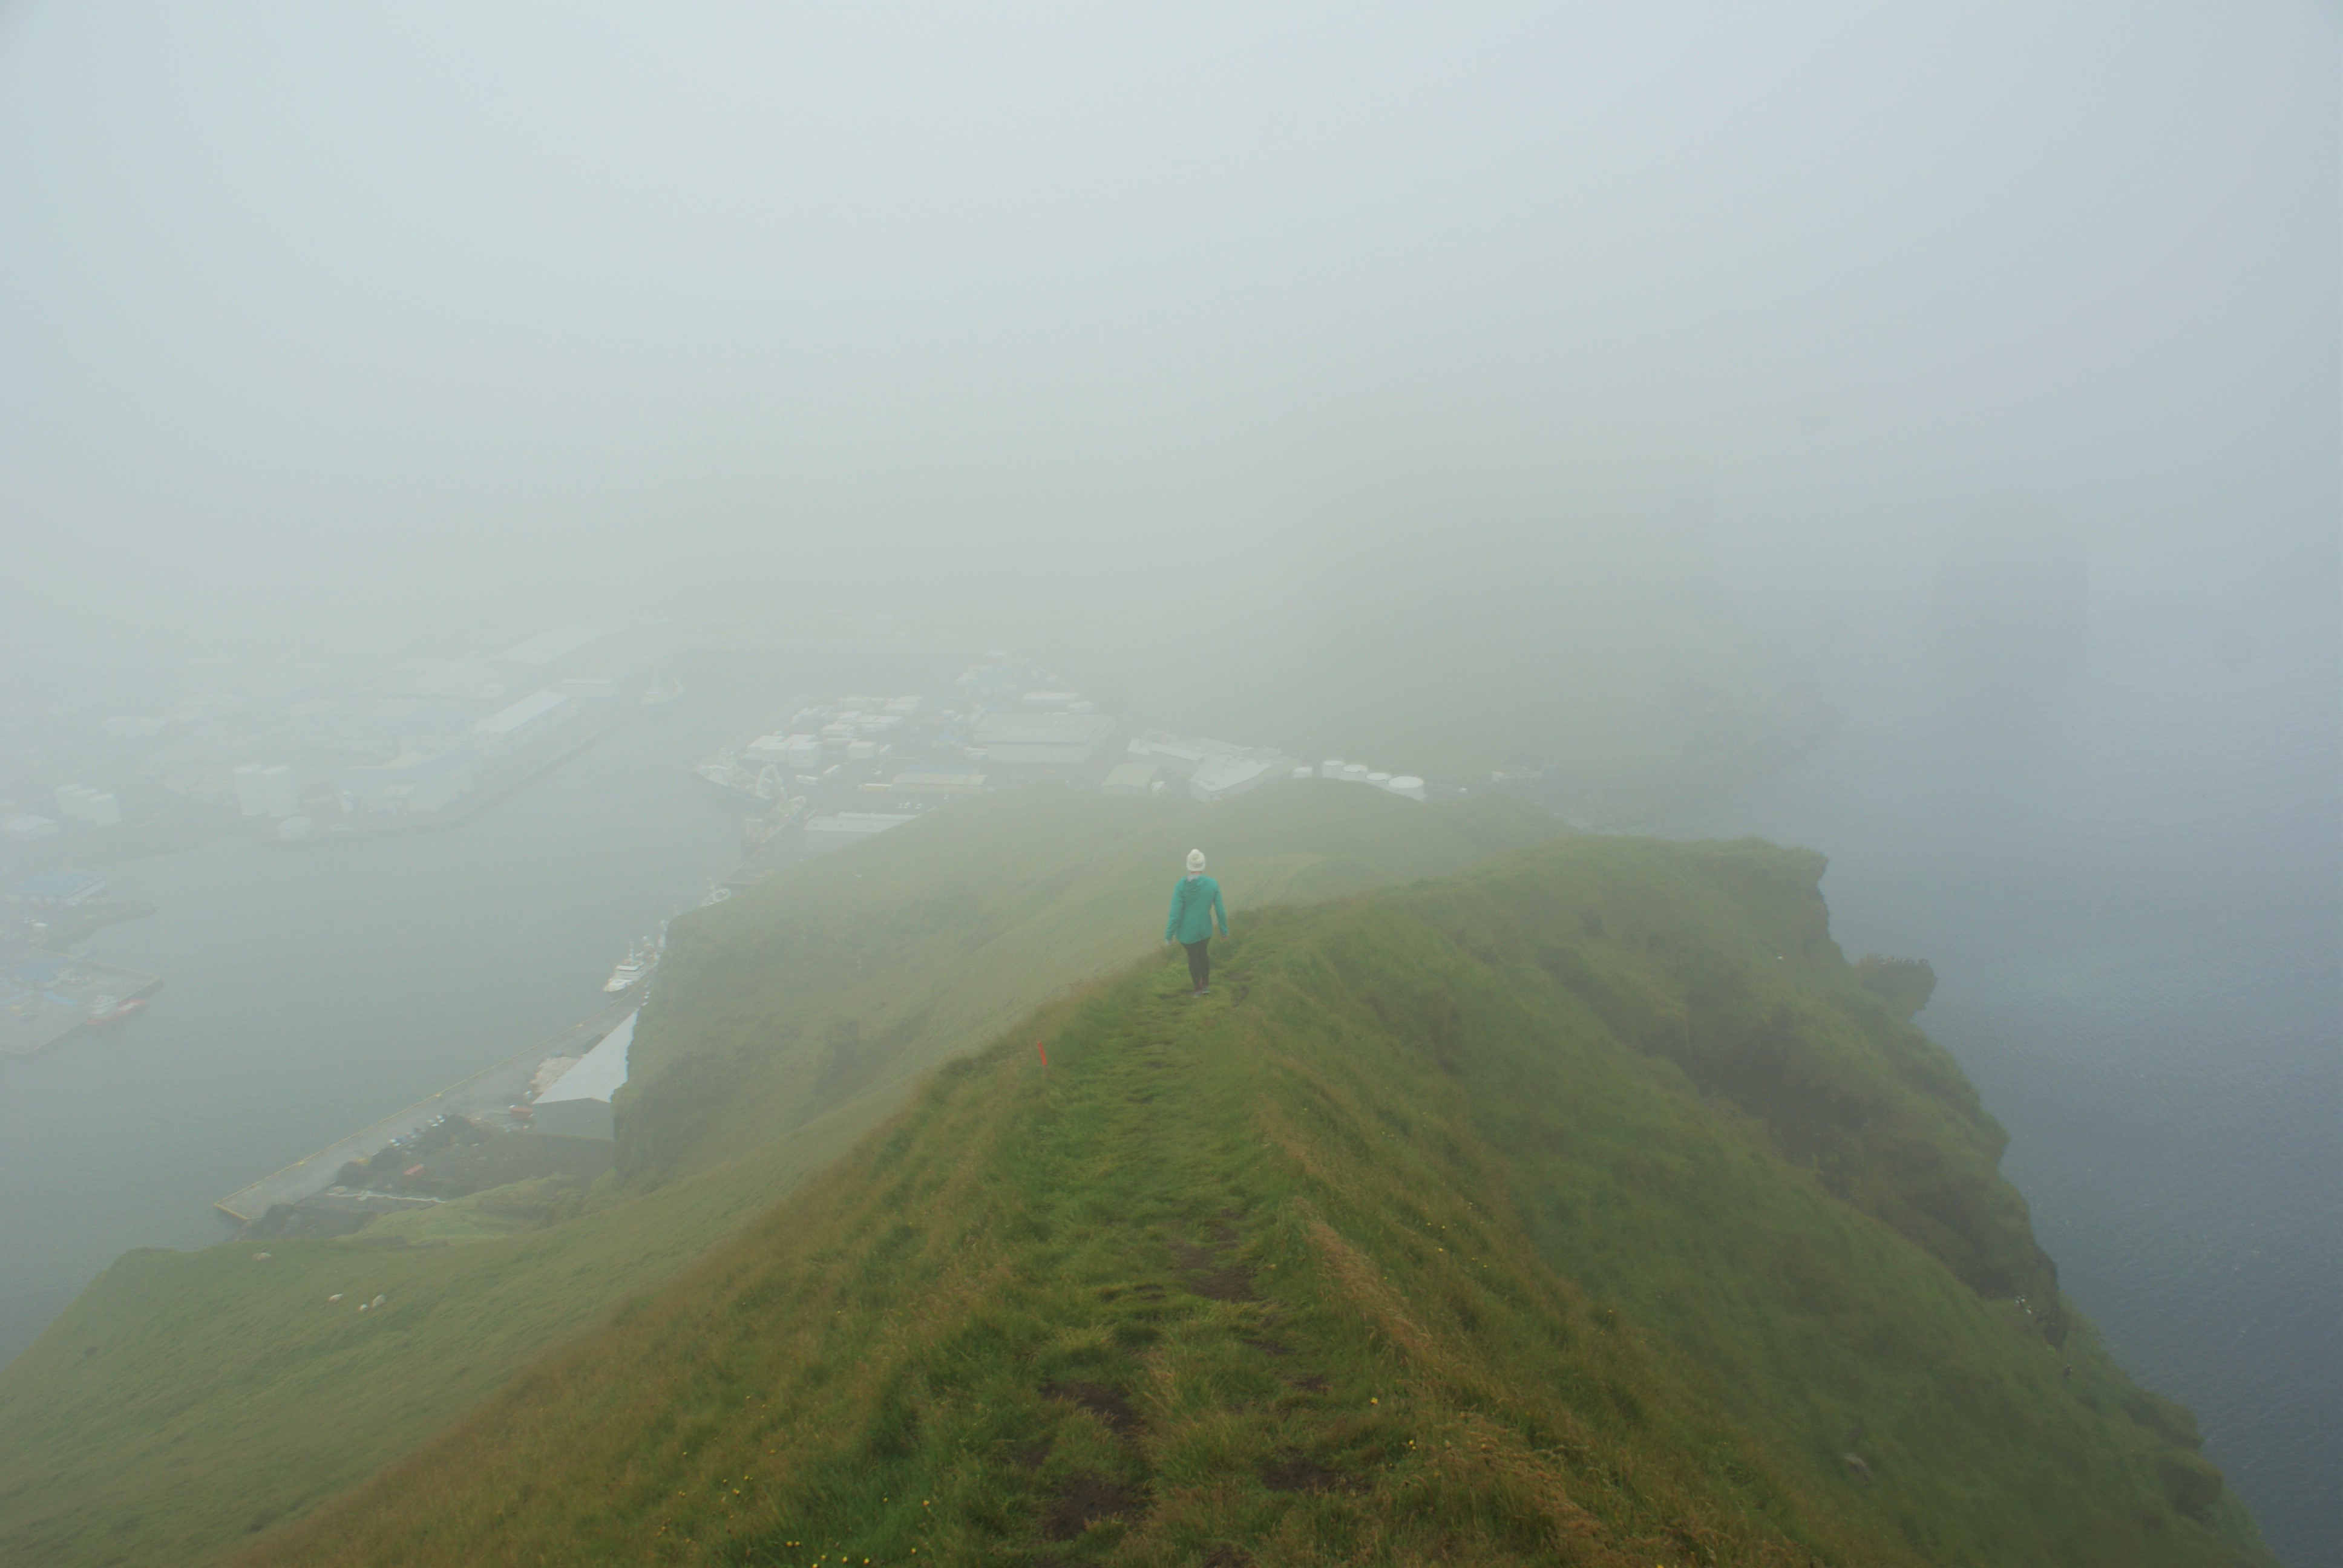 descending the ridge in a fog